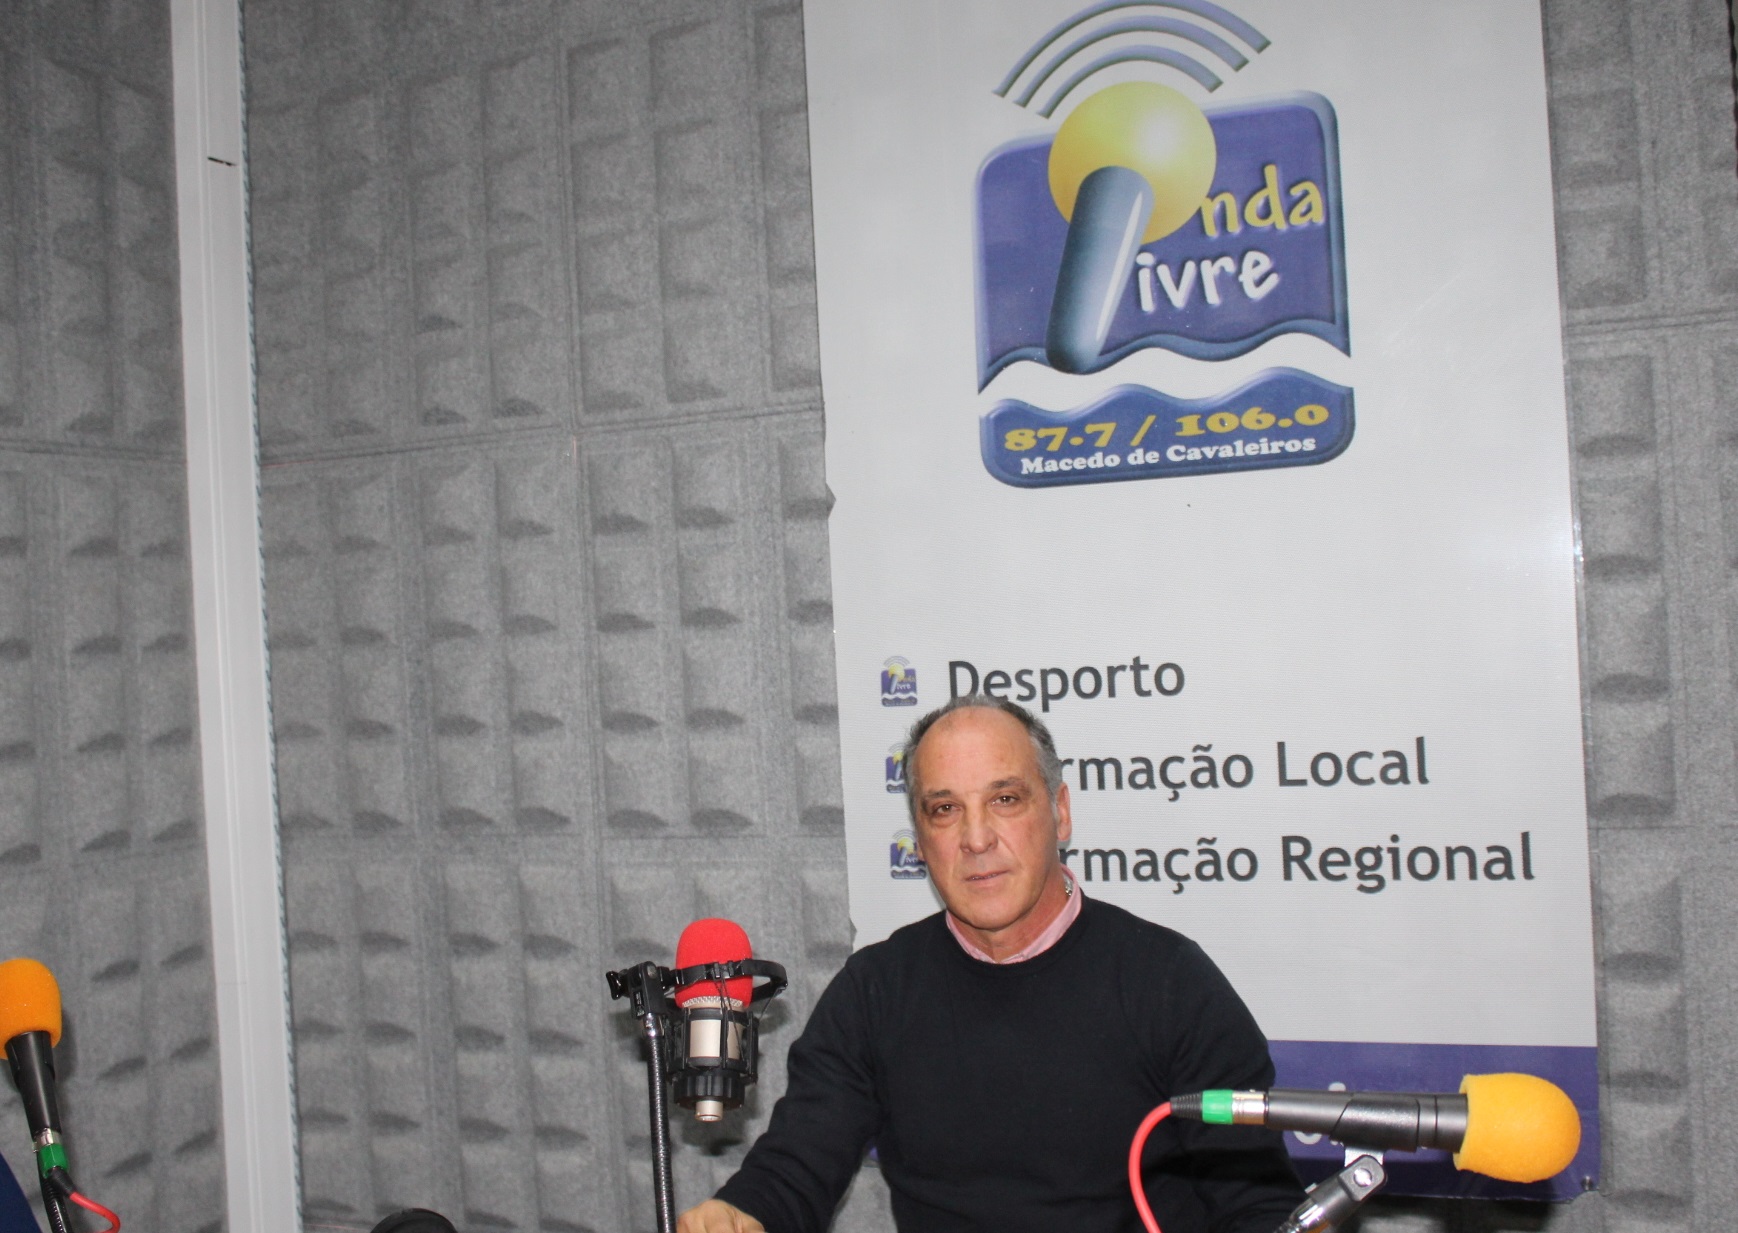 José Carlos Afonso dá entrevista alargada à Rádio Onda Livre